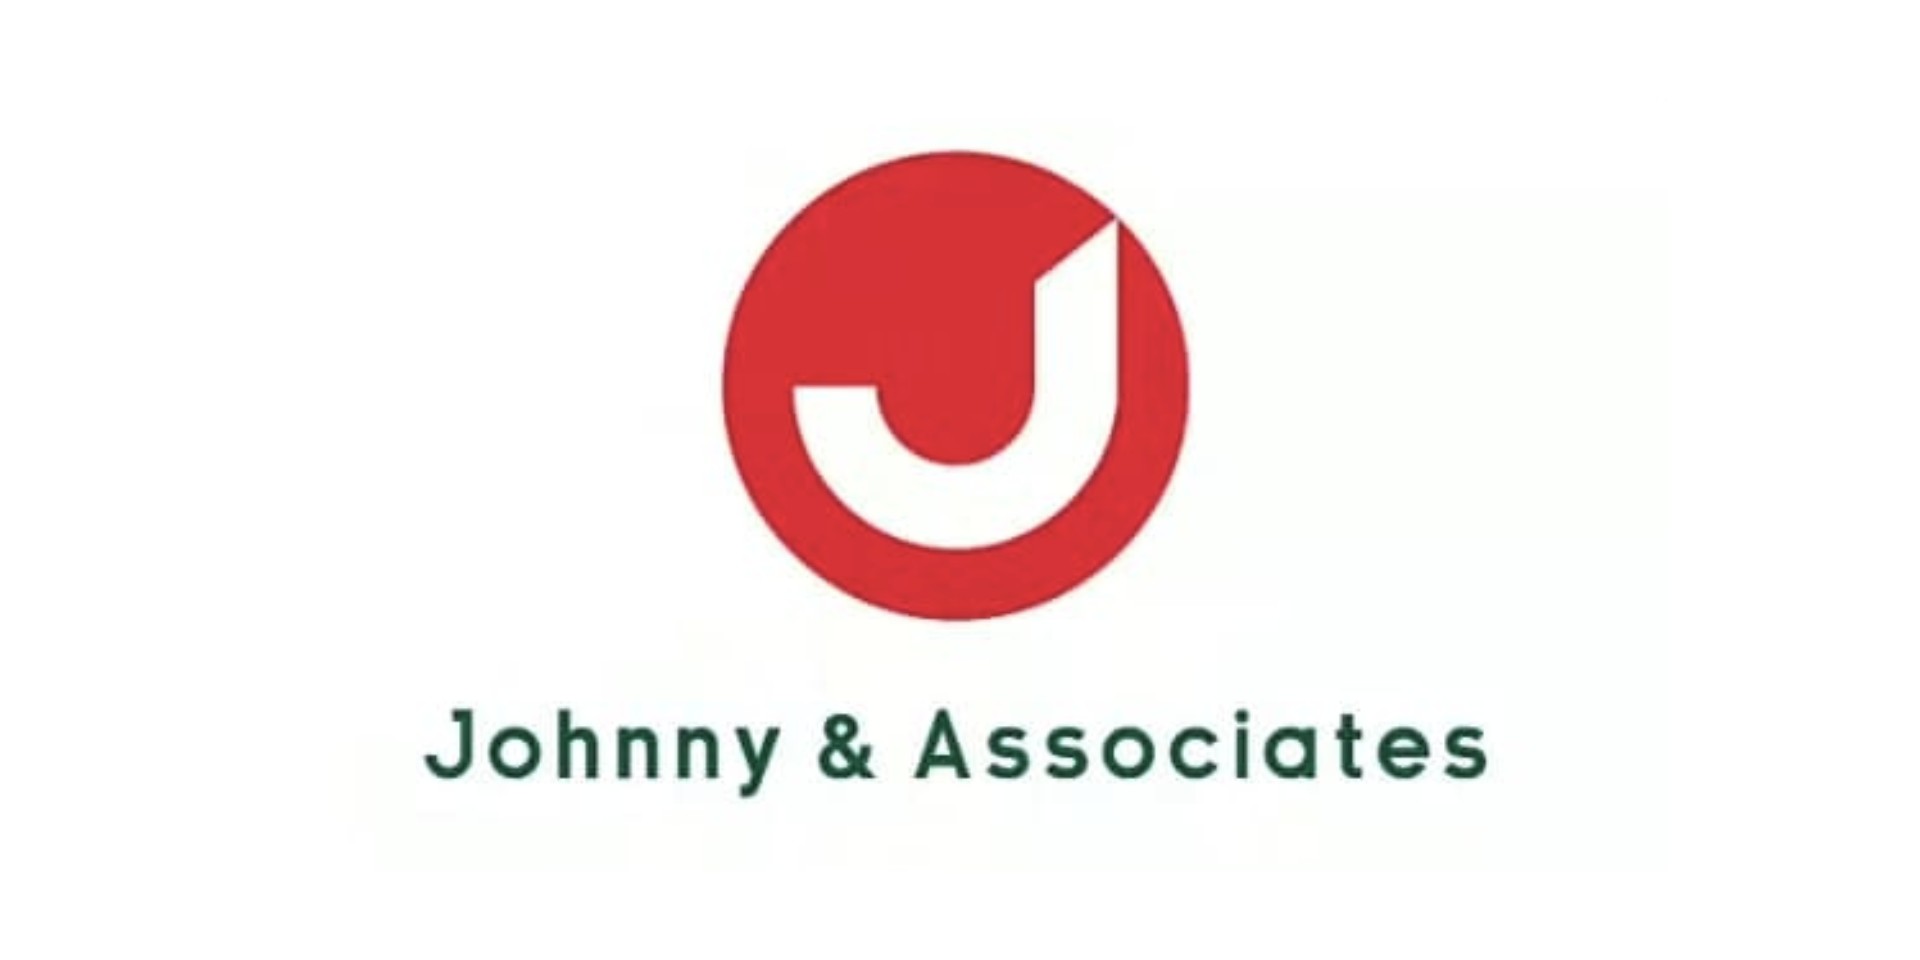 Johnny & Associates addresses allegations against founder Johnny Kitagawa